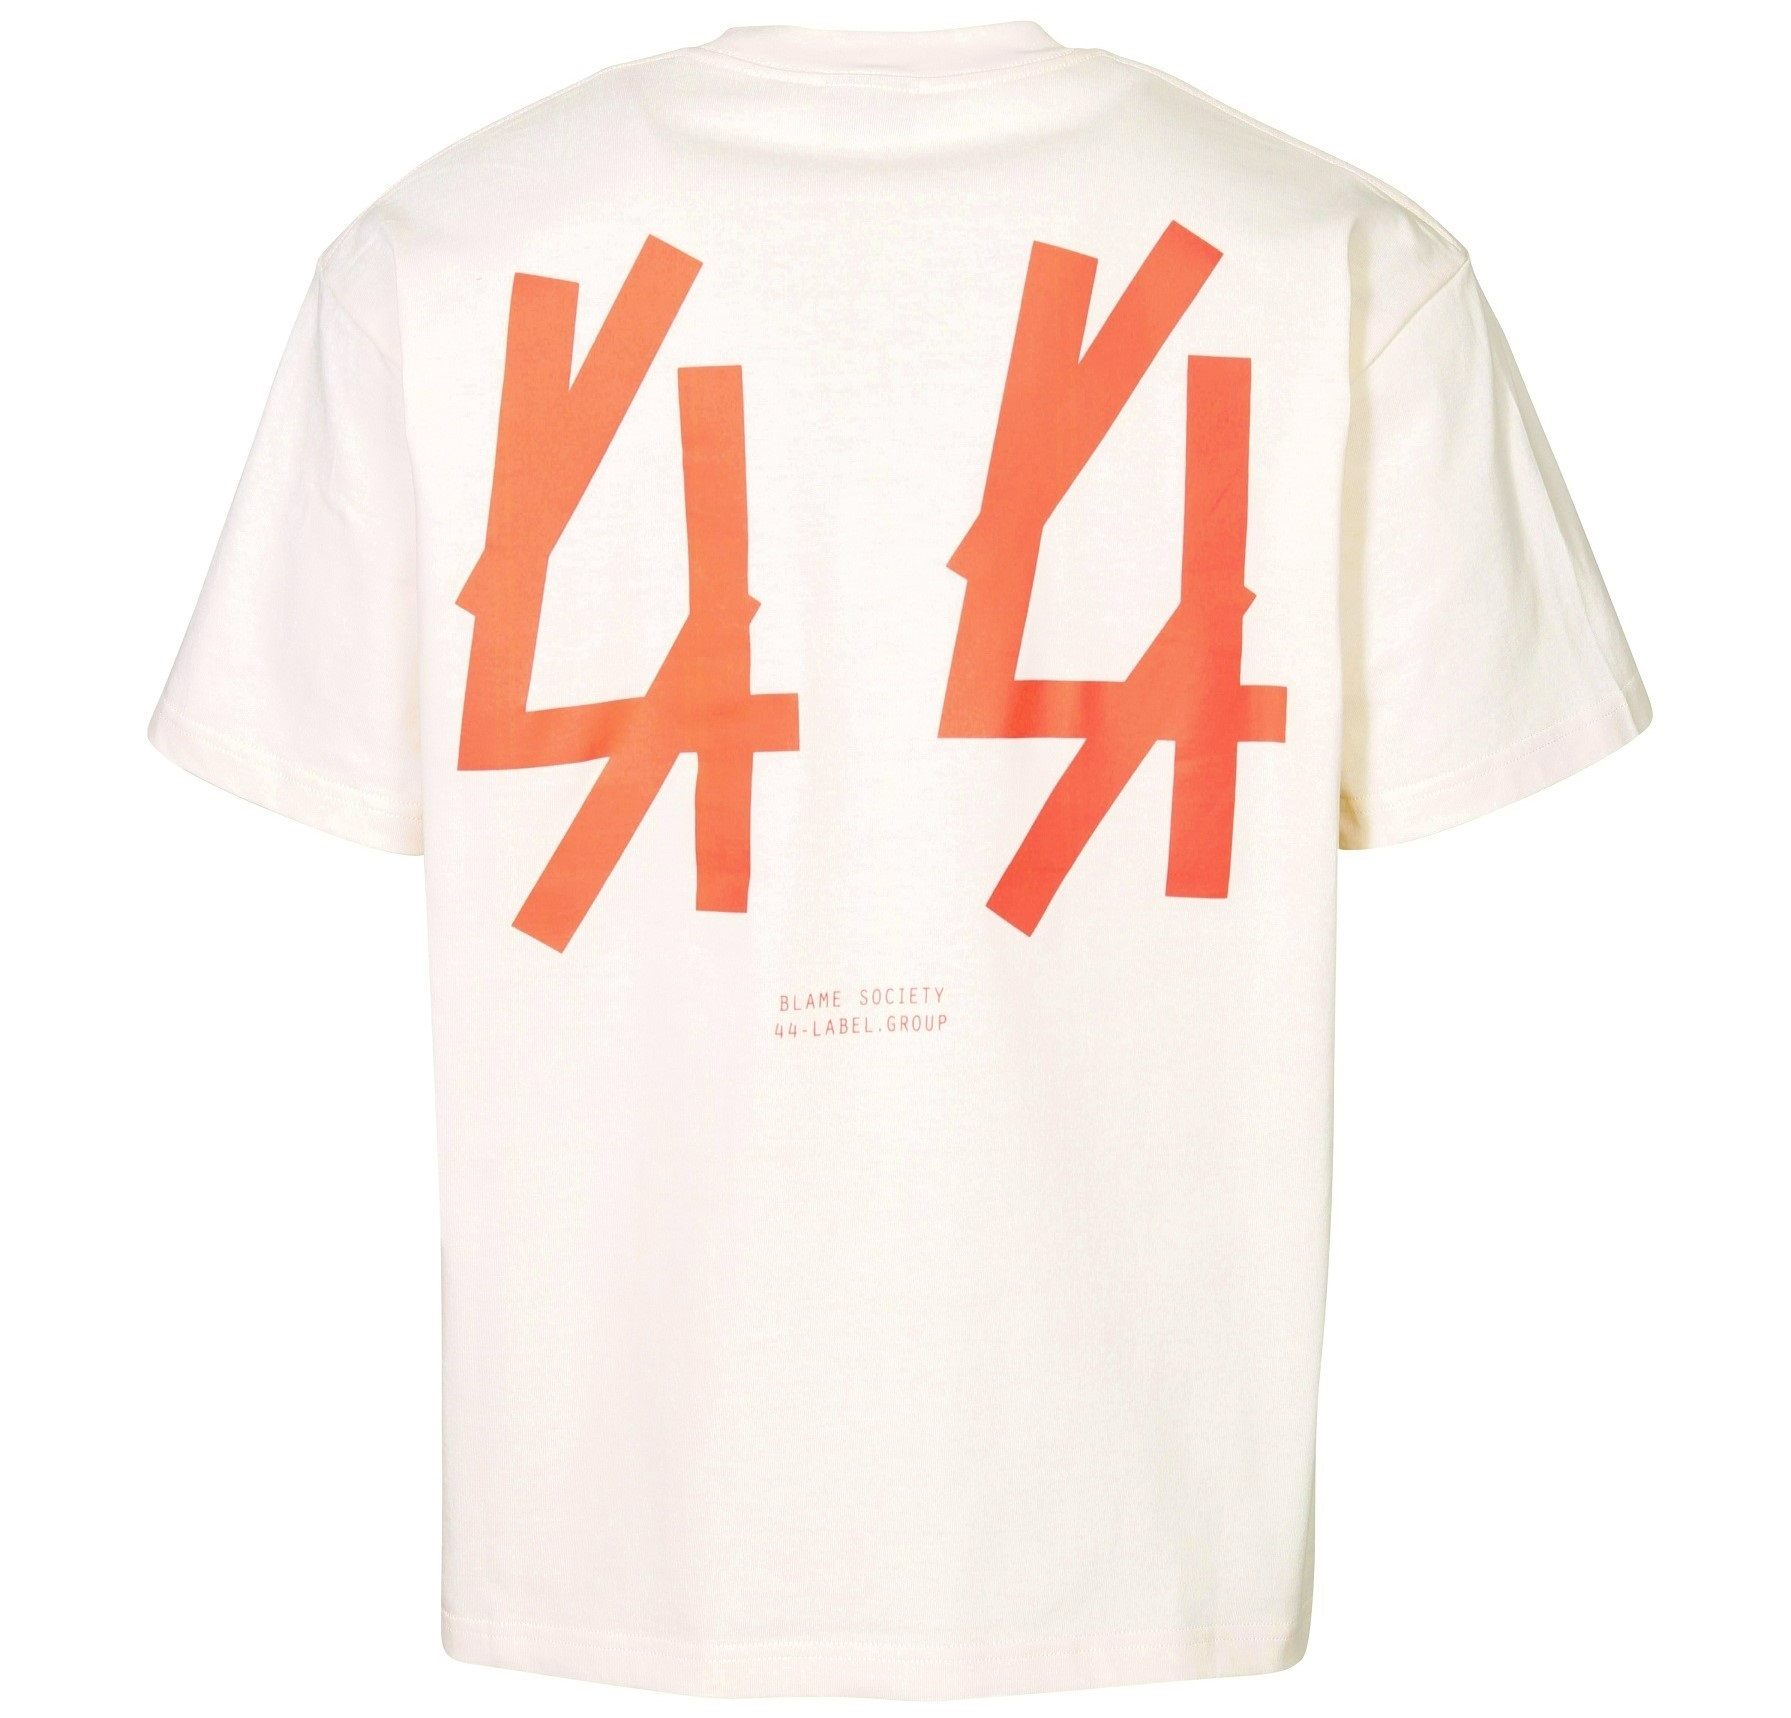 44 LABEL GROUP Original T-Shirt in Bones/Neon Print S